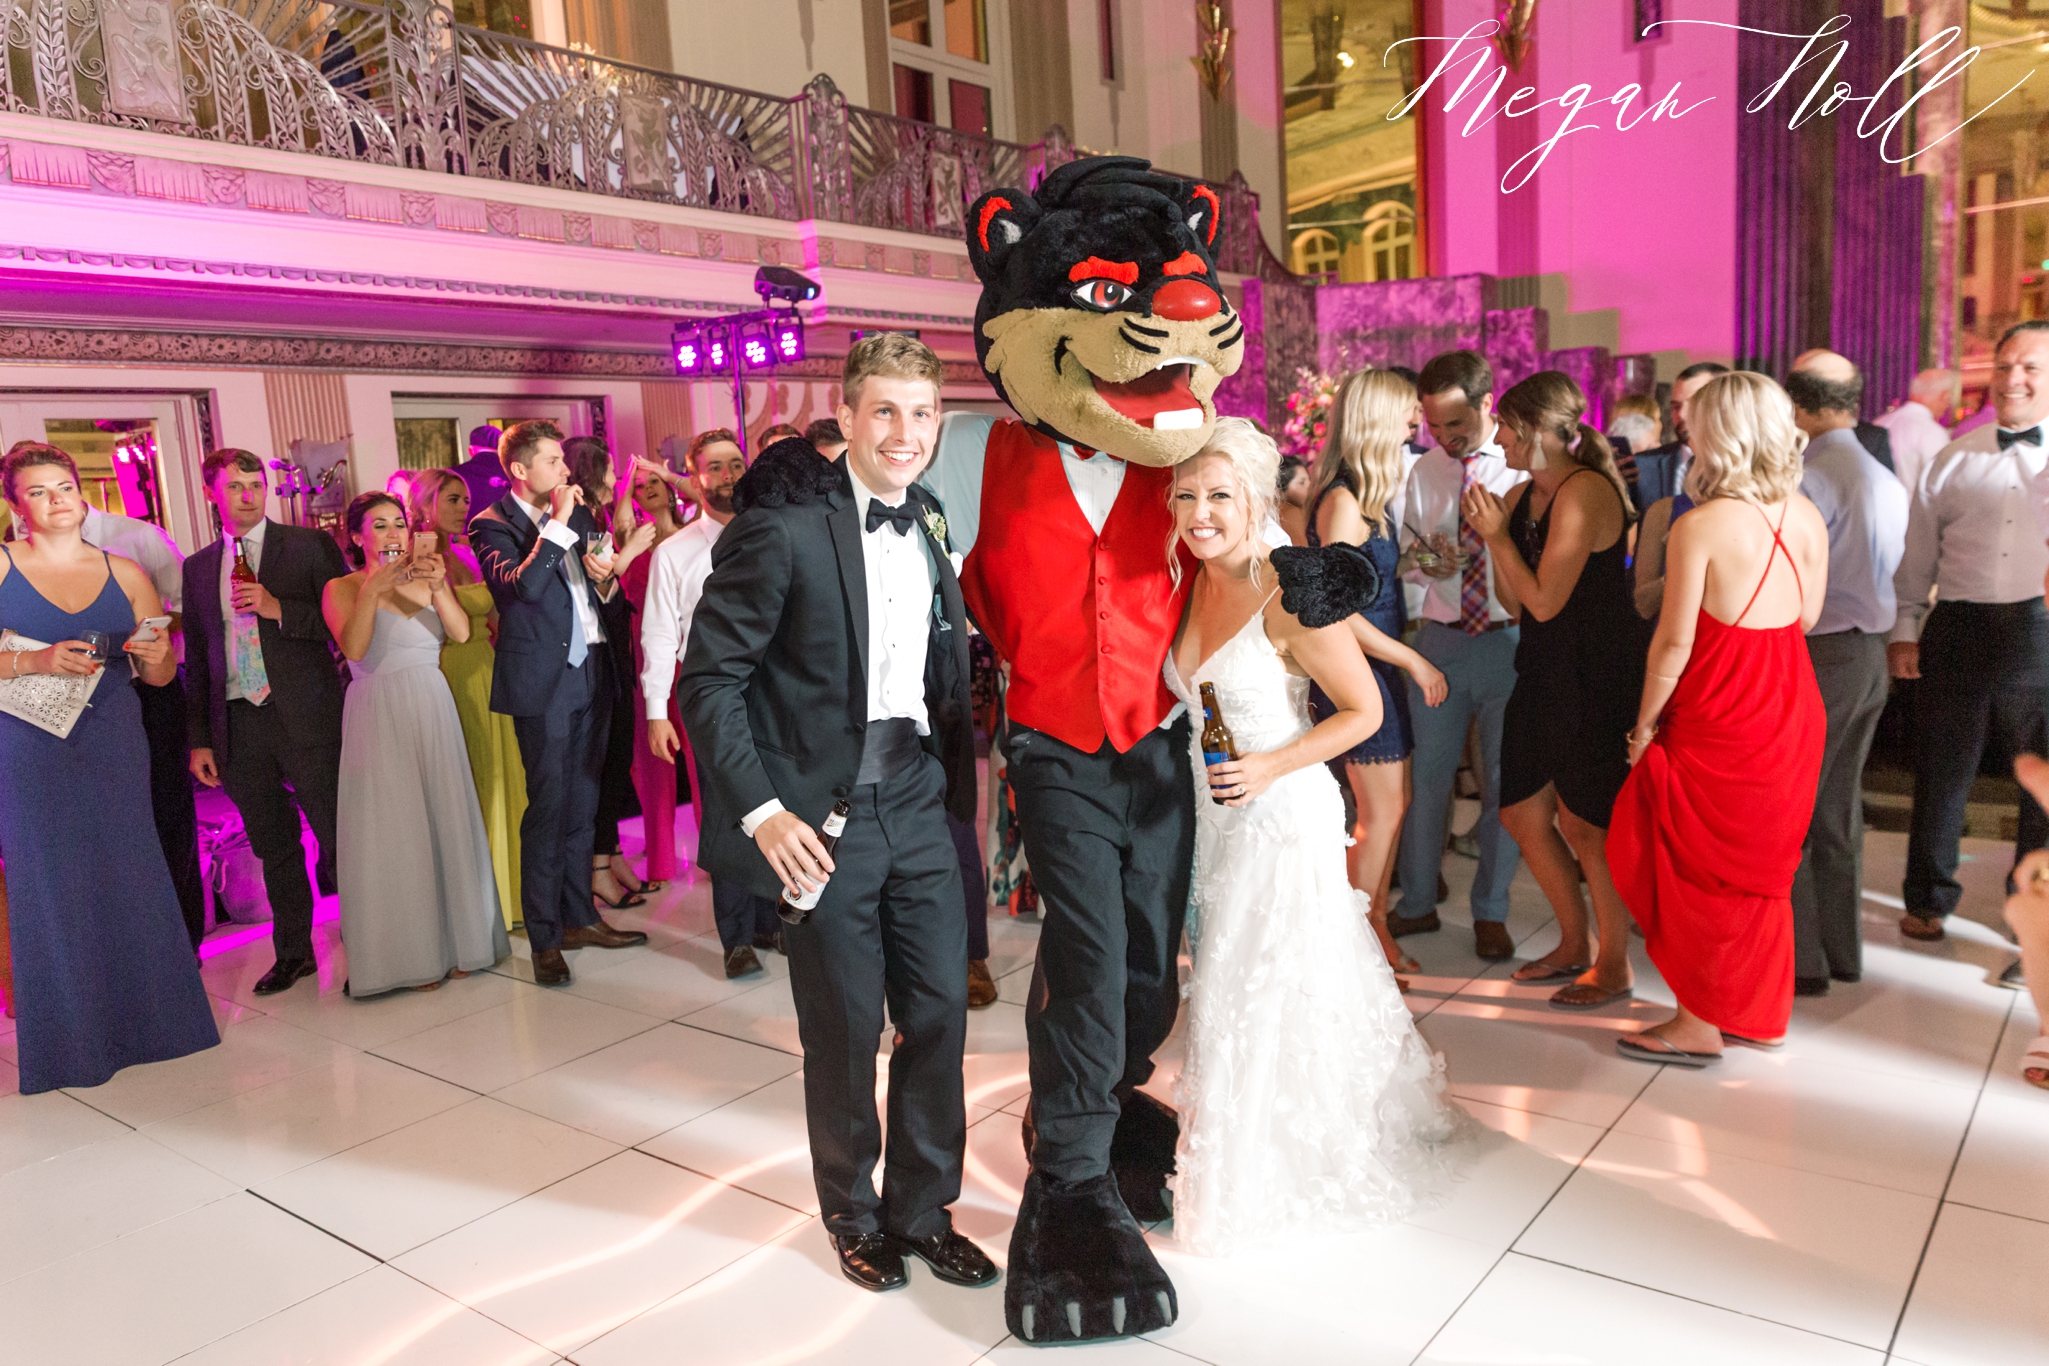 University of Cincinnati Bearcat making a visit to reception held at Hilton Netherland Plaza